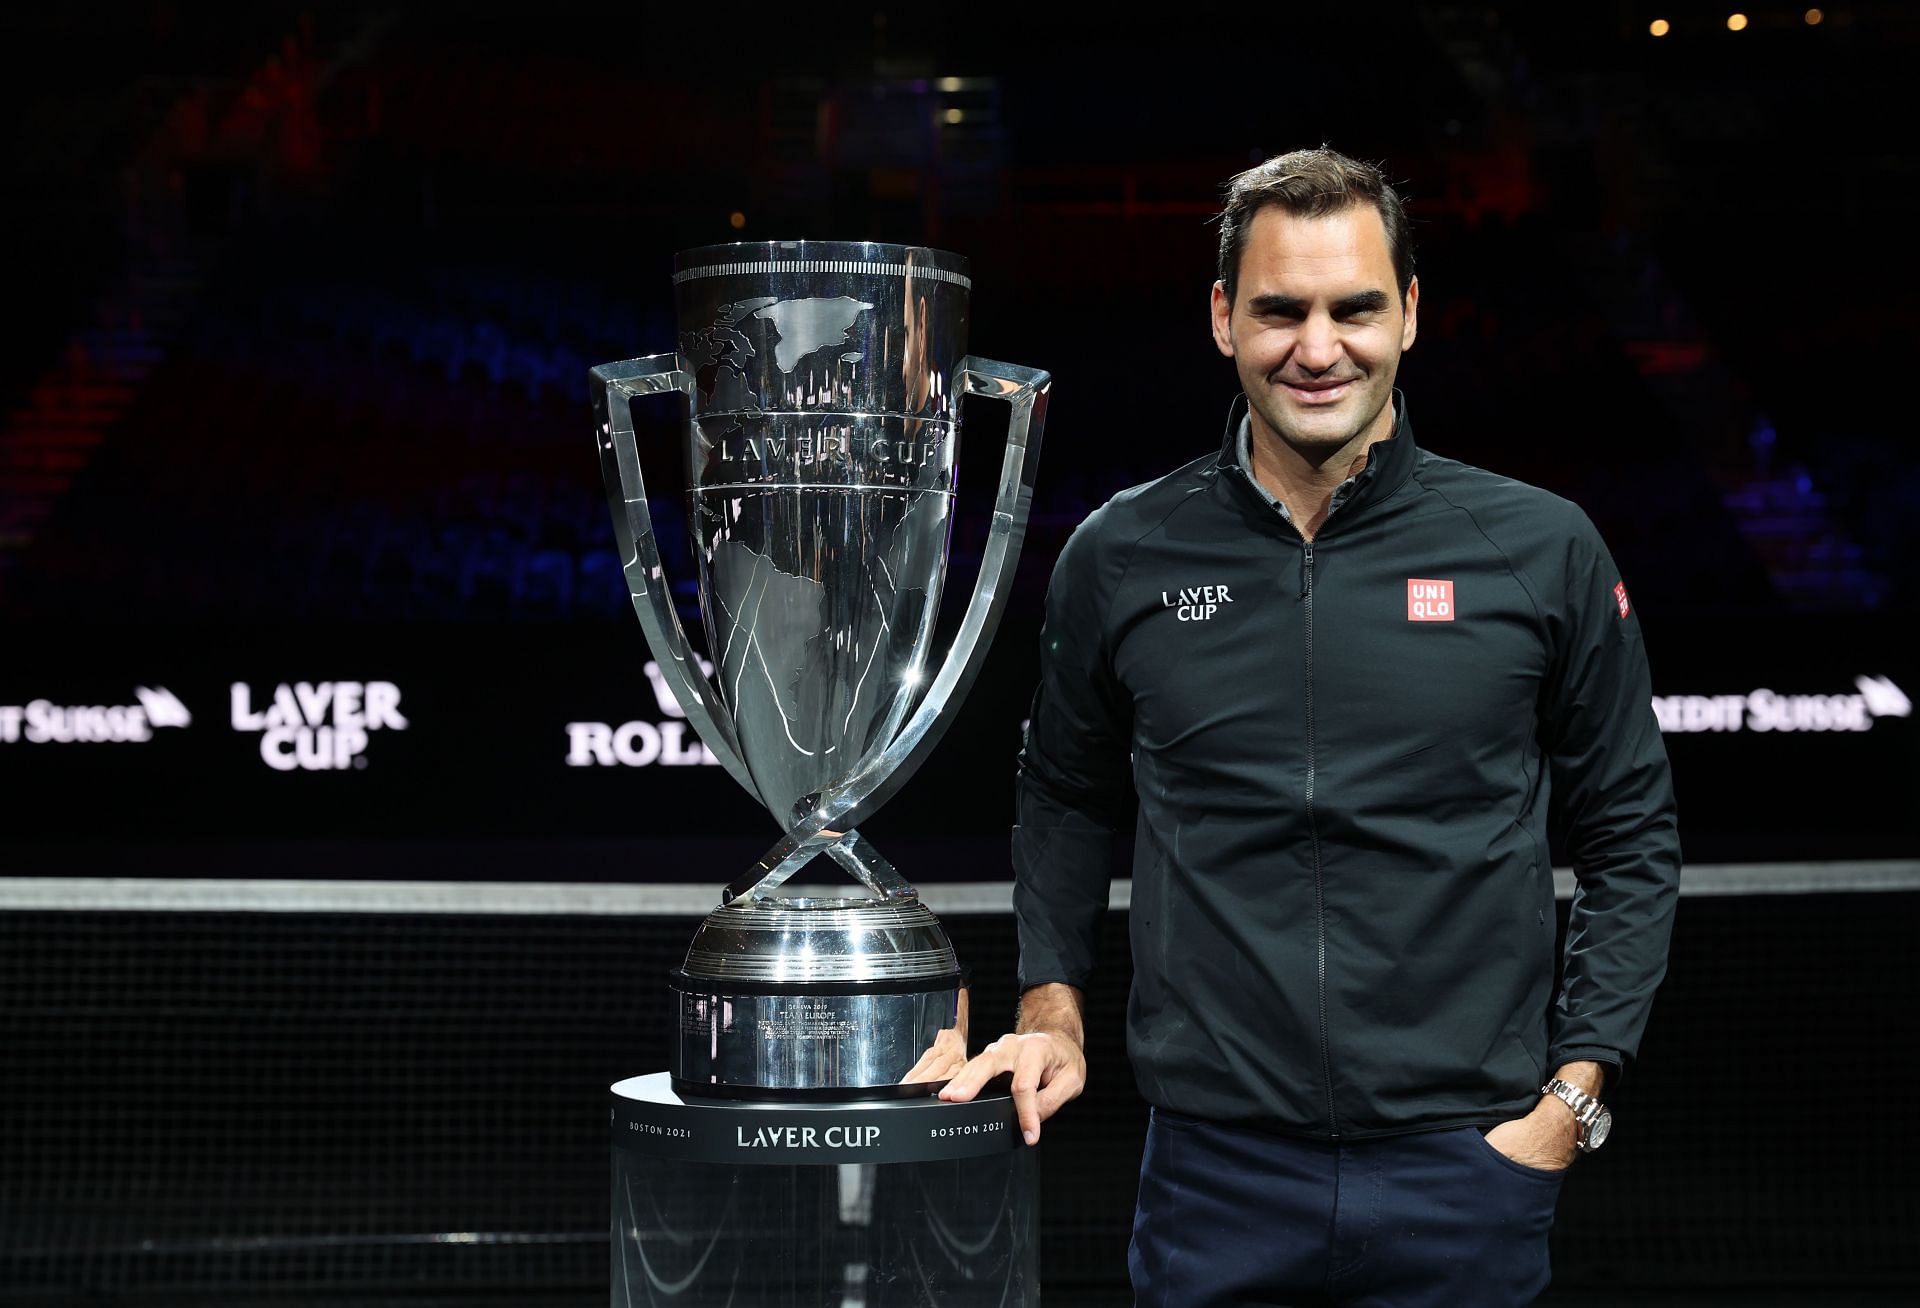 Roger Federer at the 2021 Laver Cup 2021